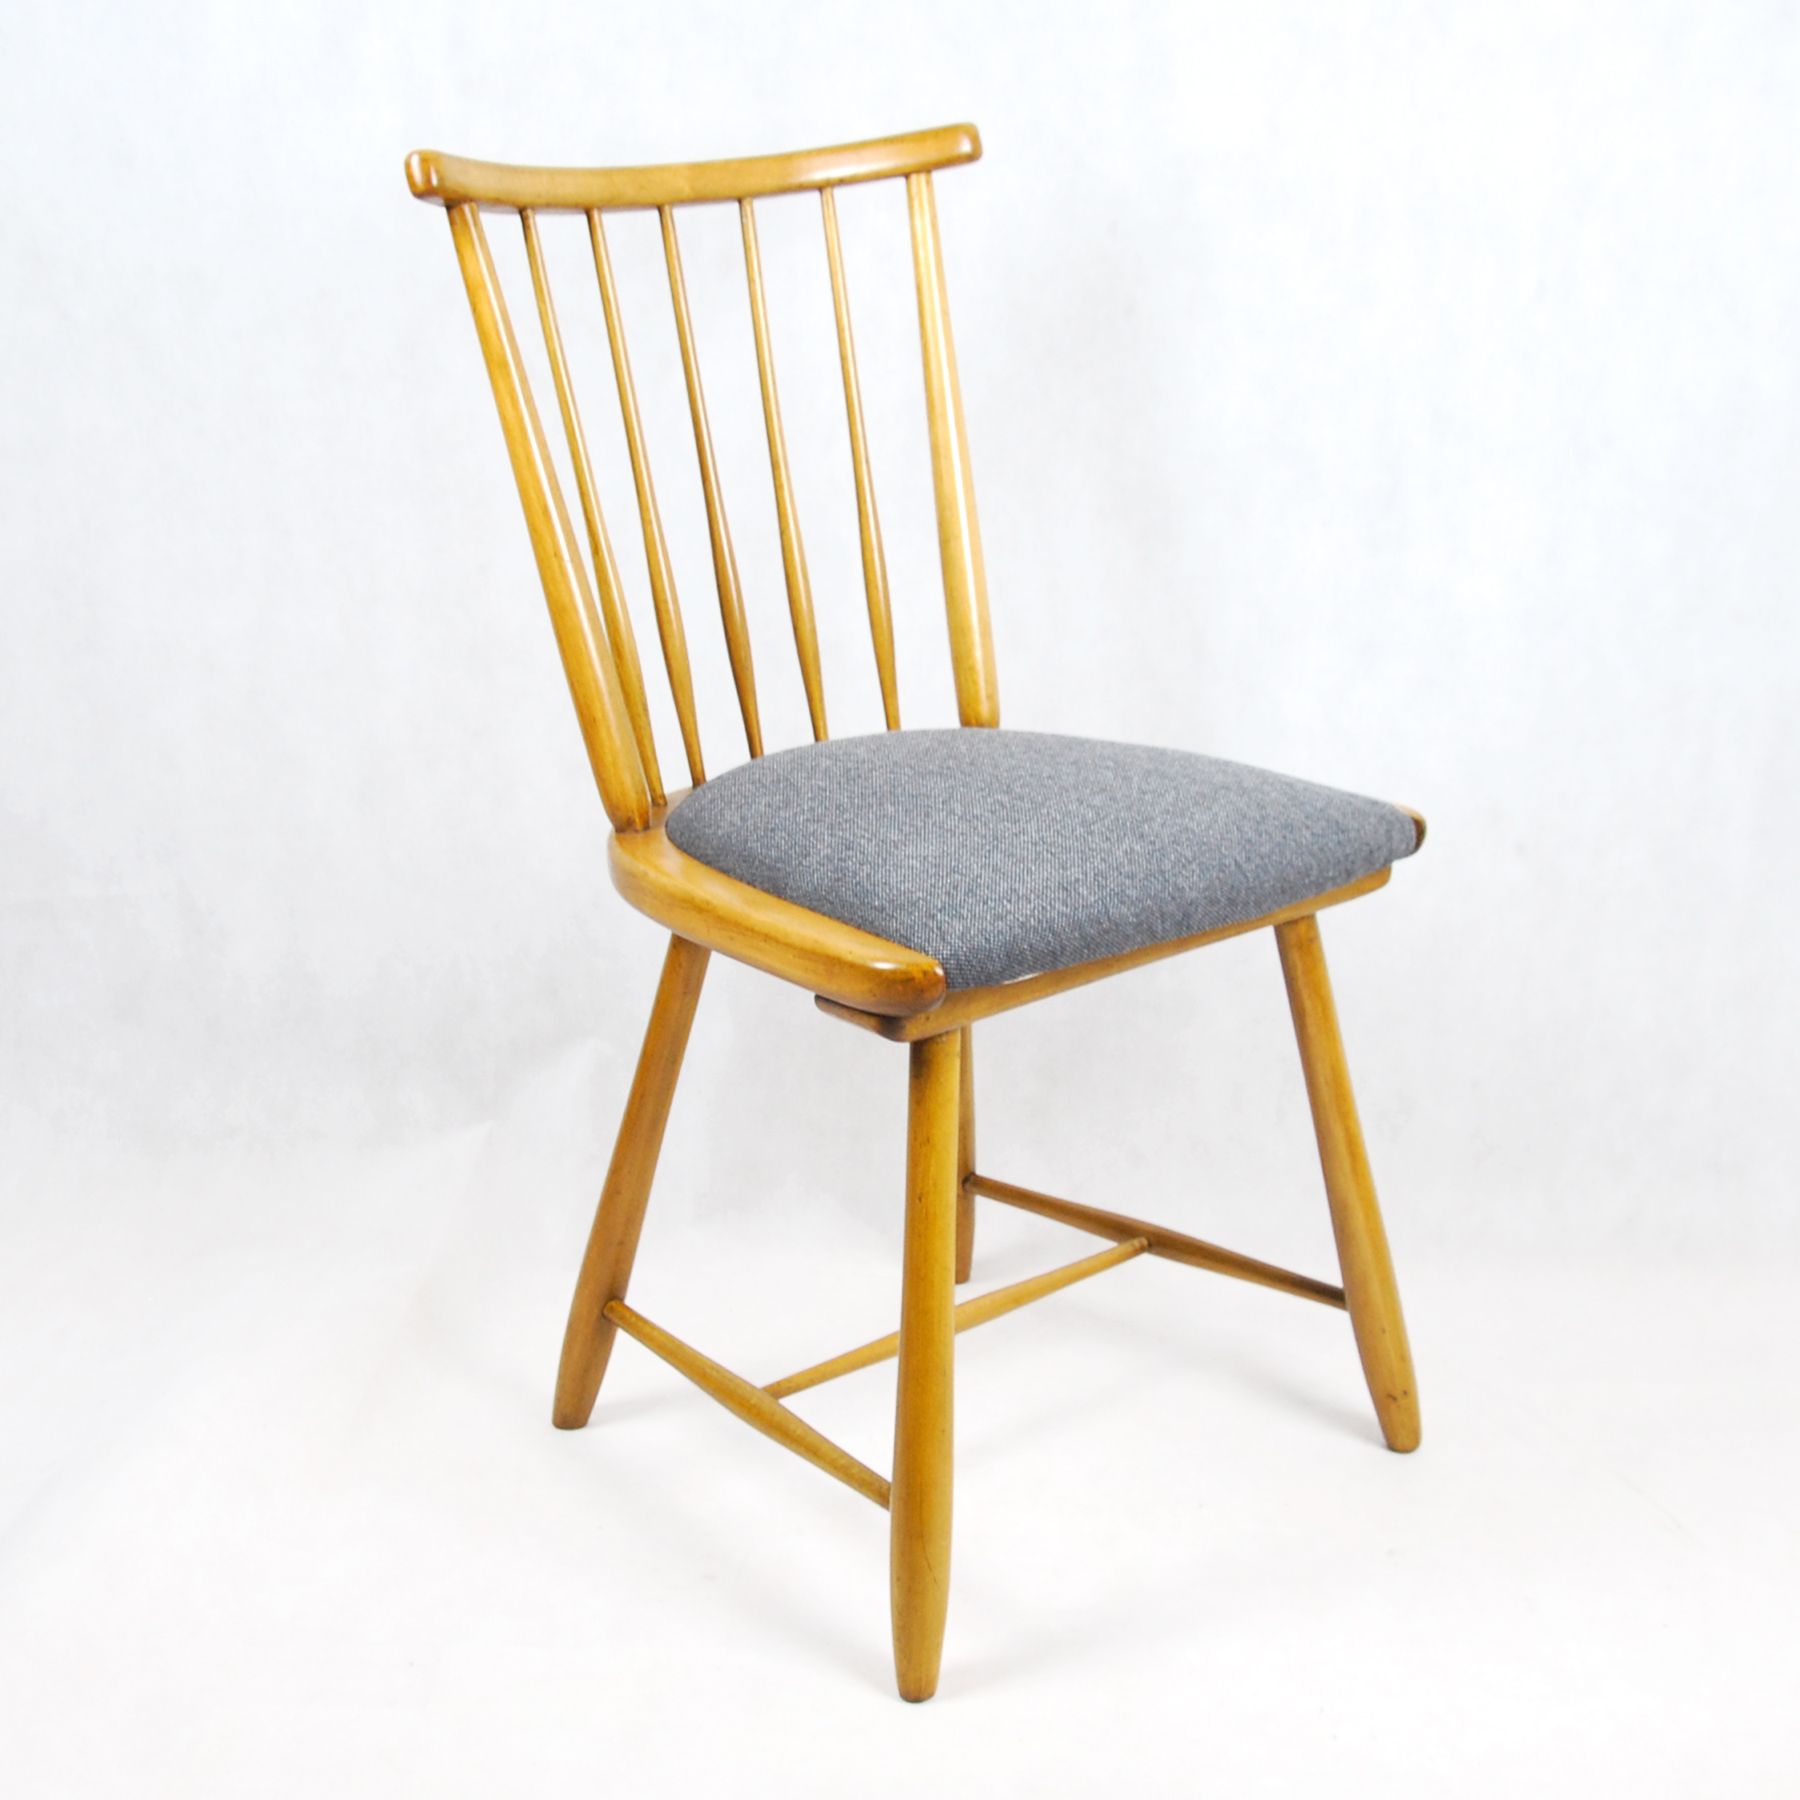 Vintage Chair By Ercol Design Market